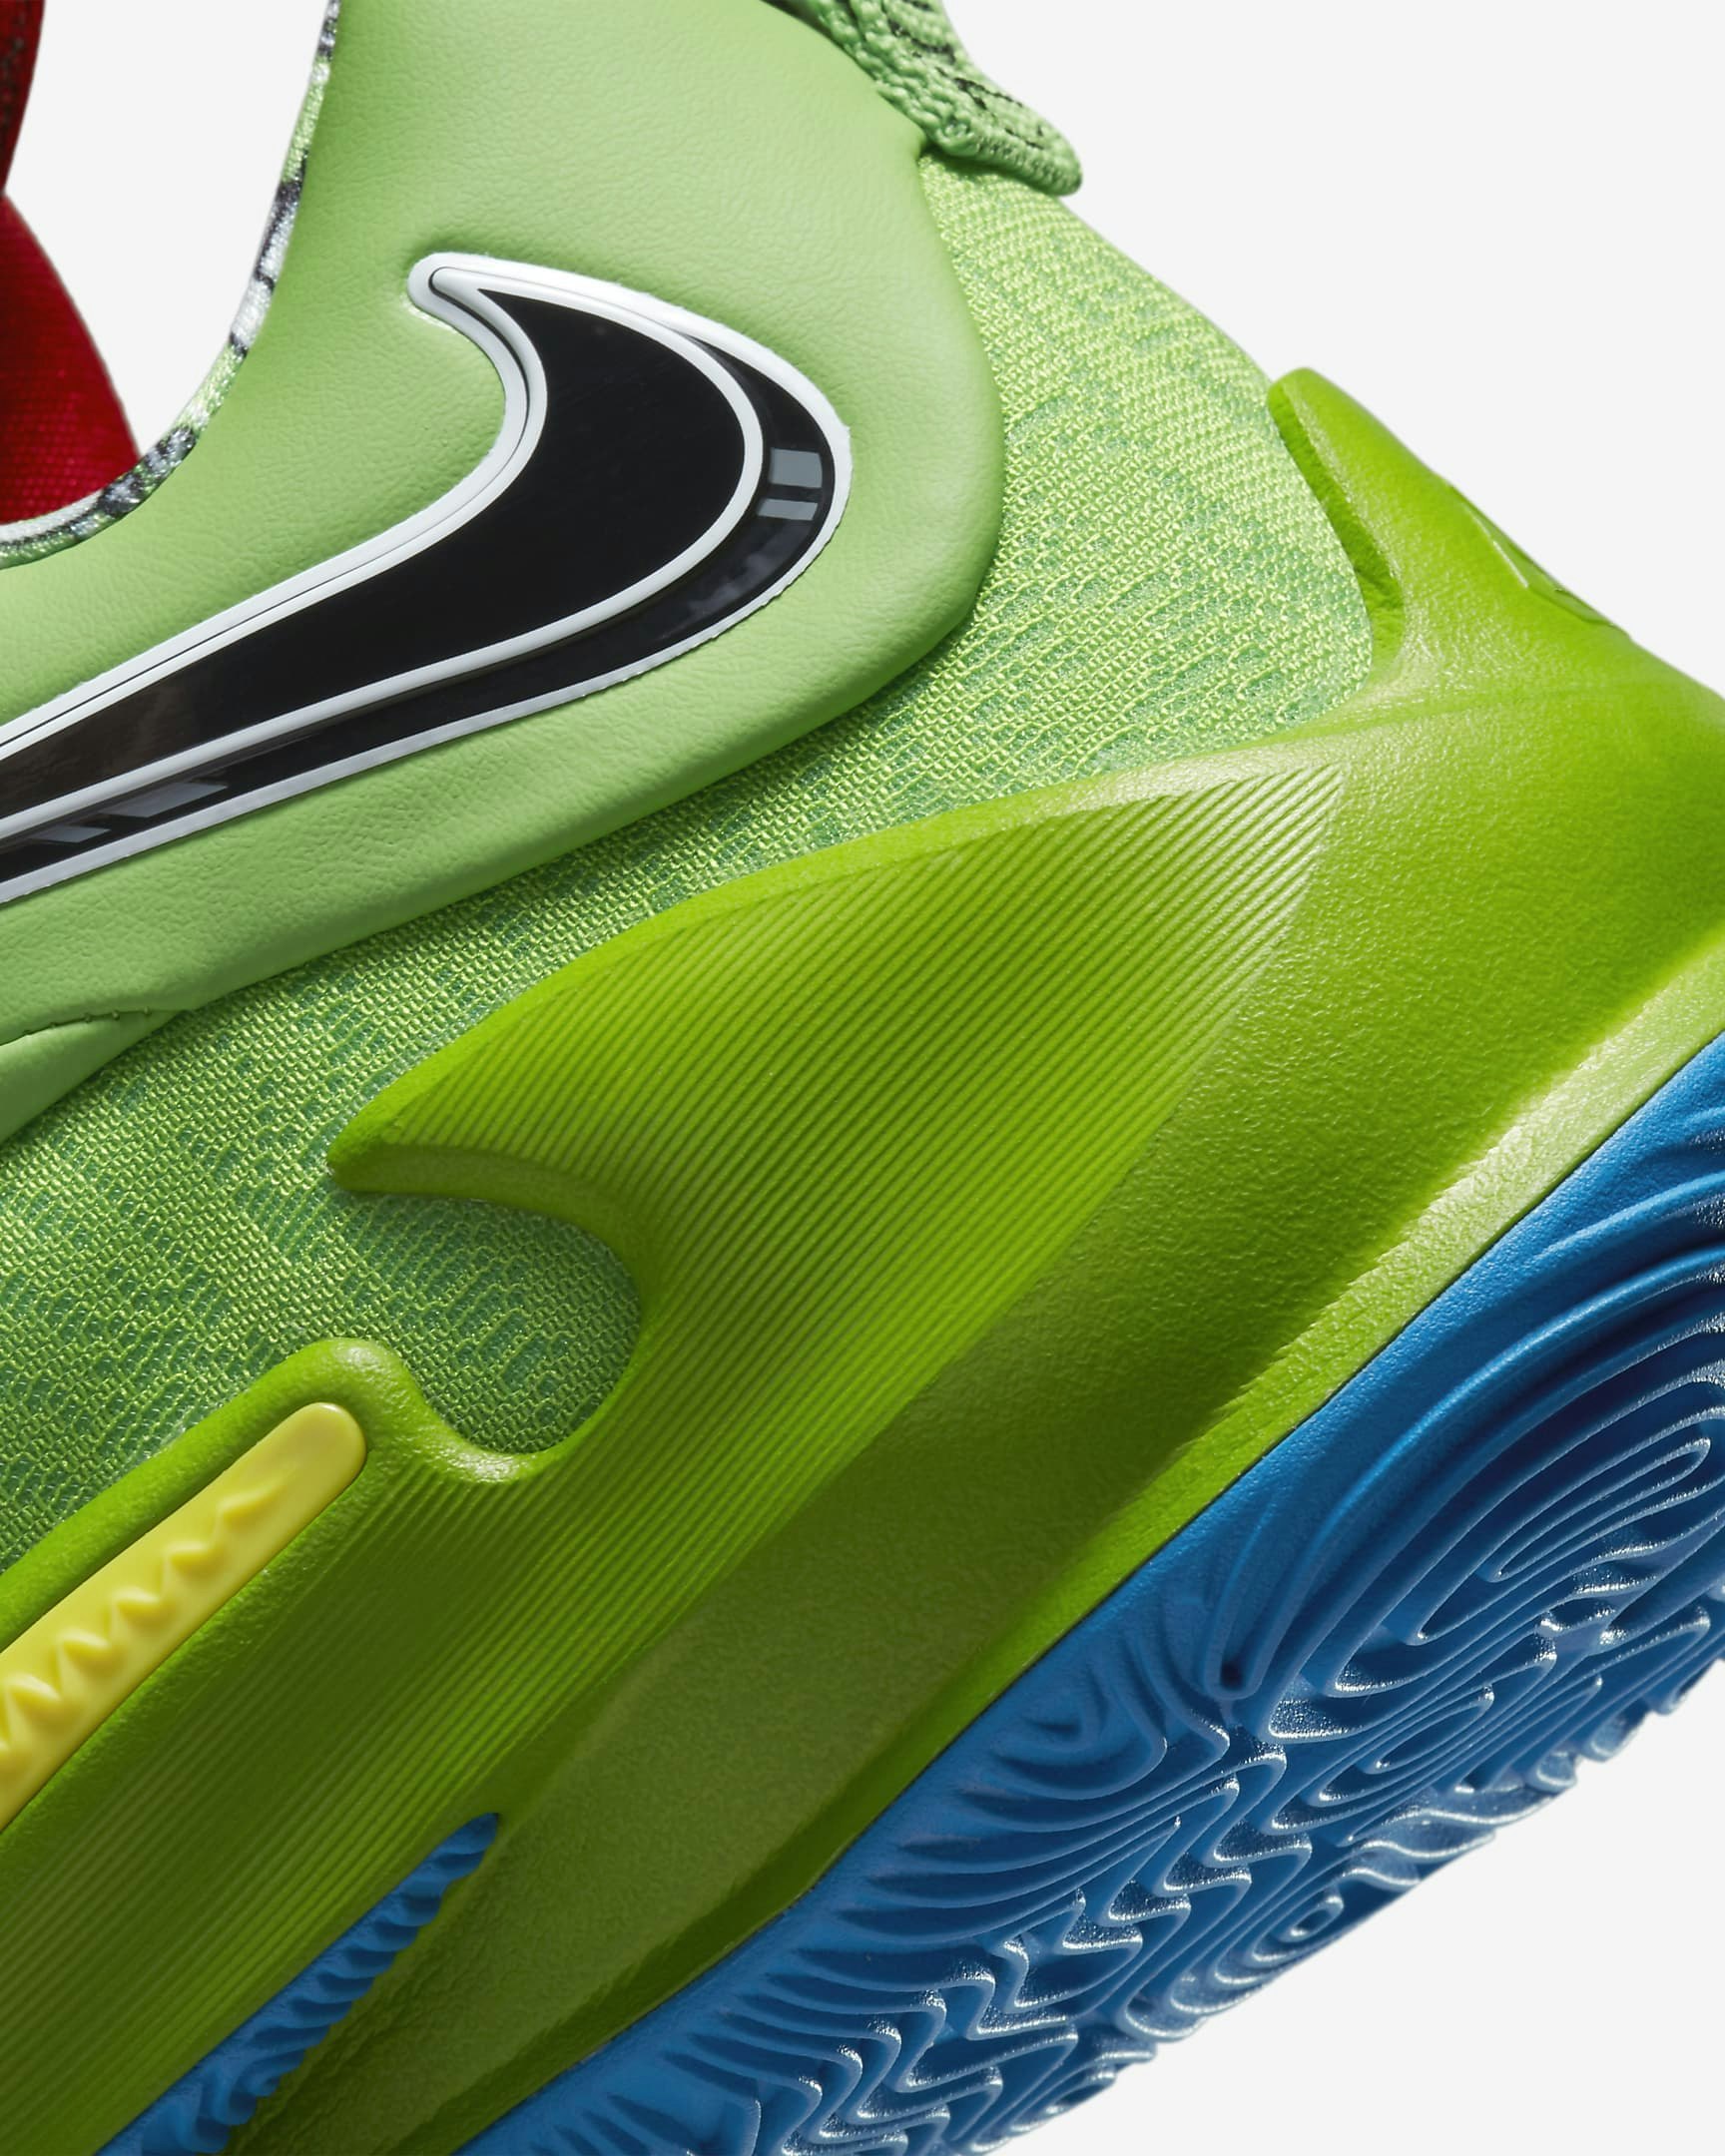 UNO x Nike Zoom Freak 3 "Green Bean"